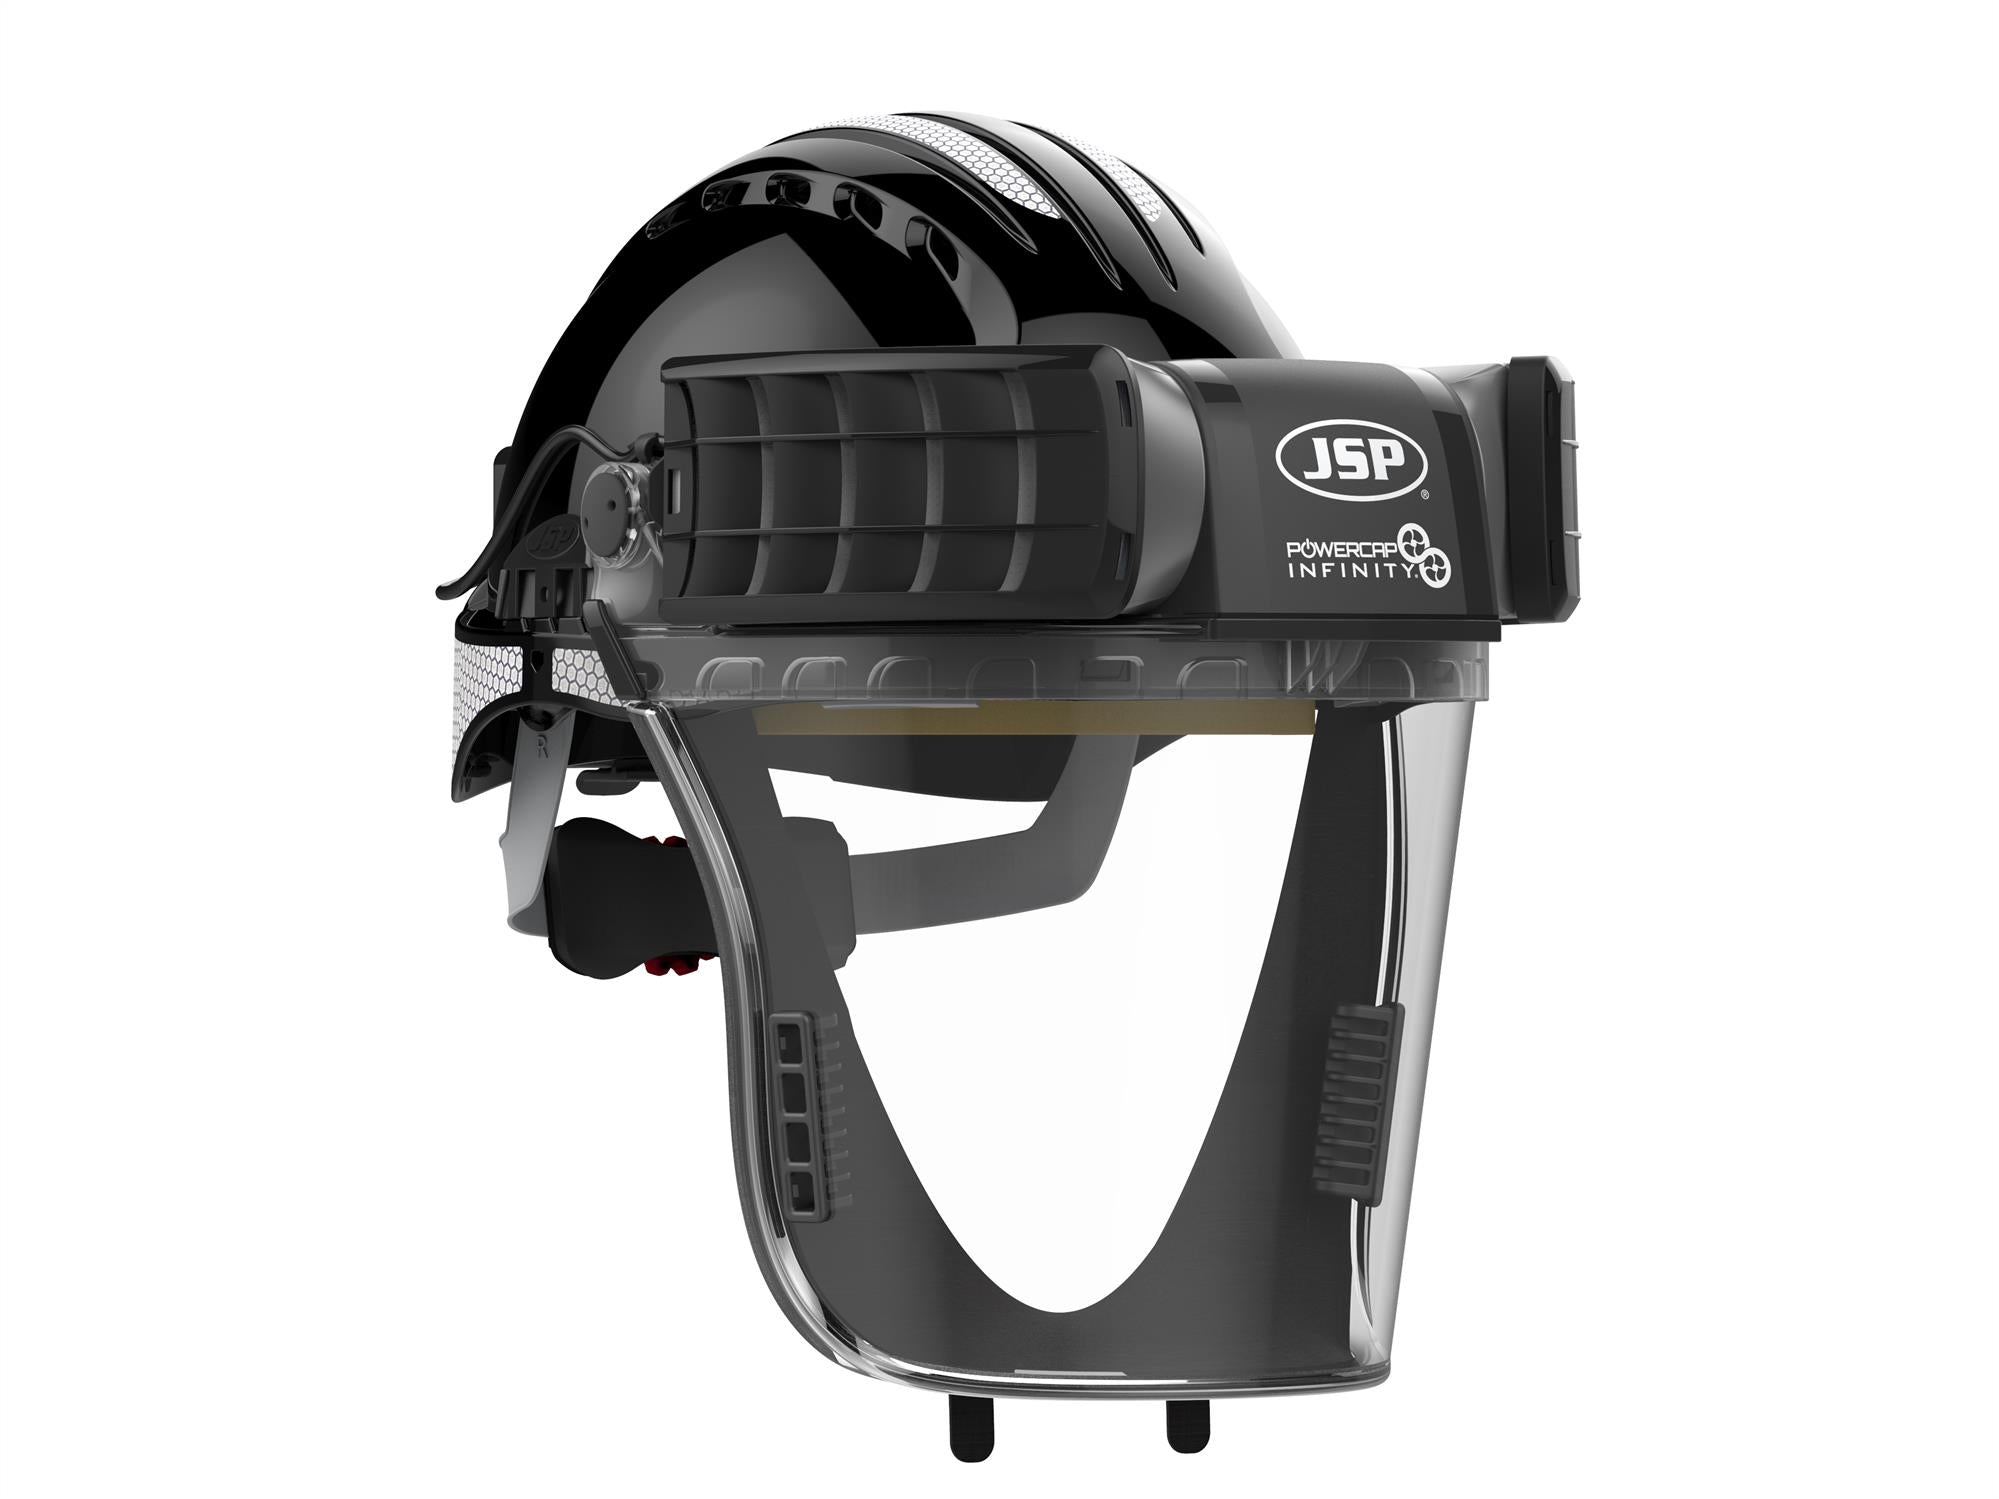 JSP Powercap® Infinity® PAPR black helmet powered respirator complete unit